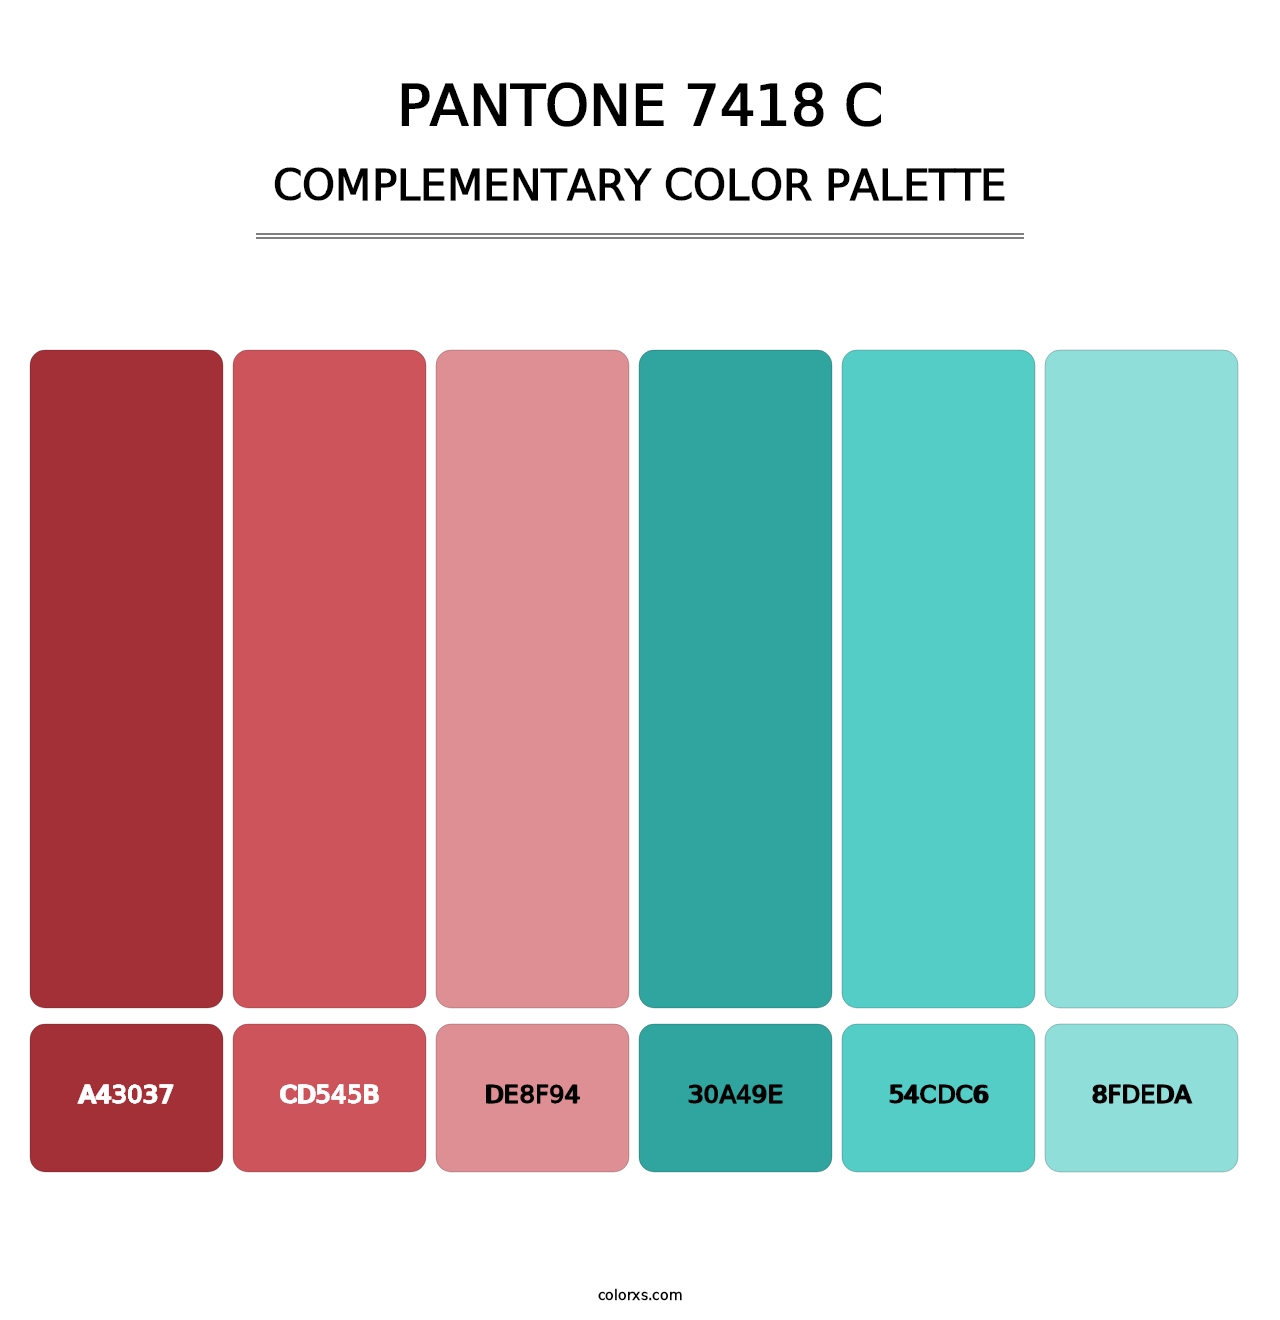 PANTONE 7418 C - Complementary Color Palette